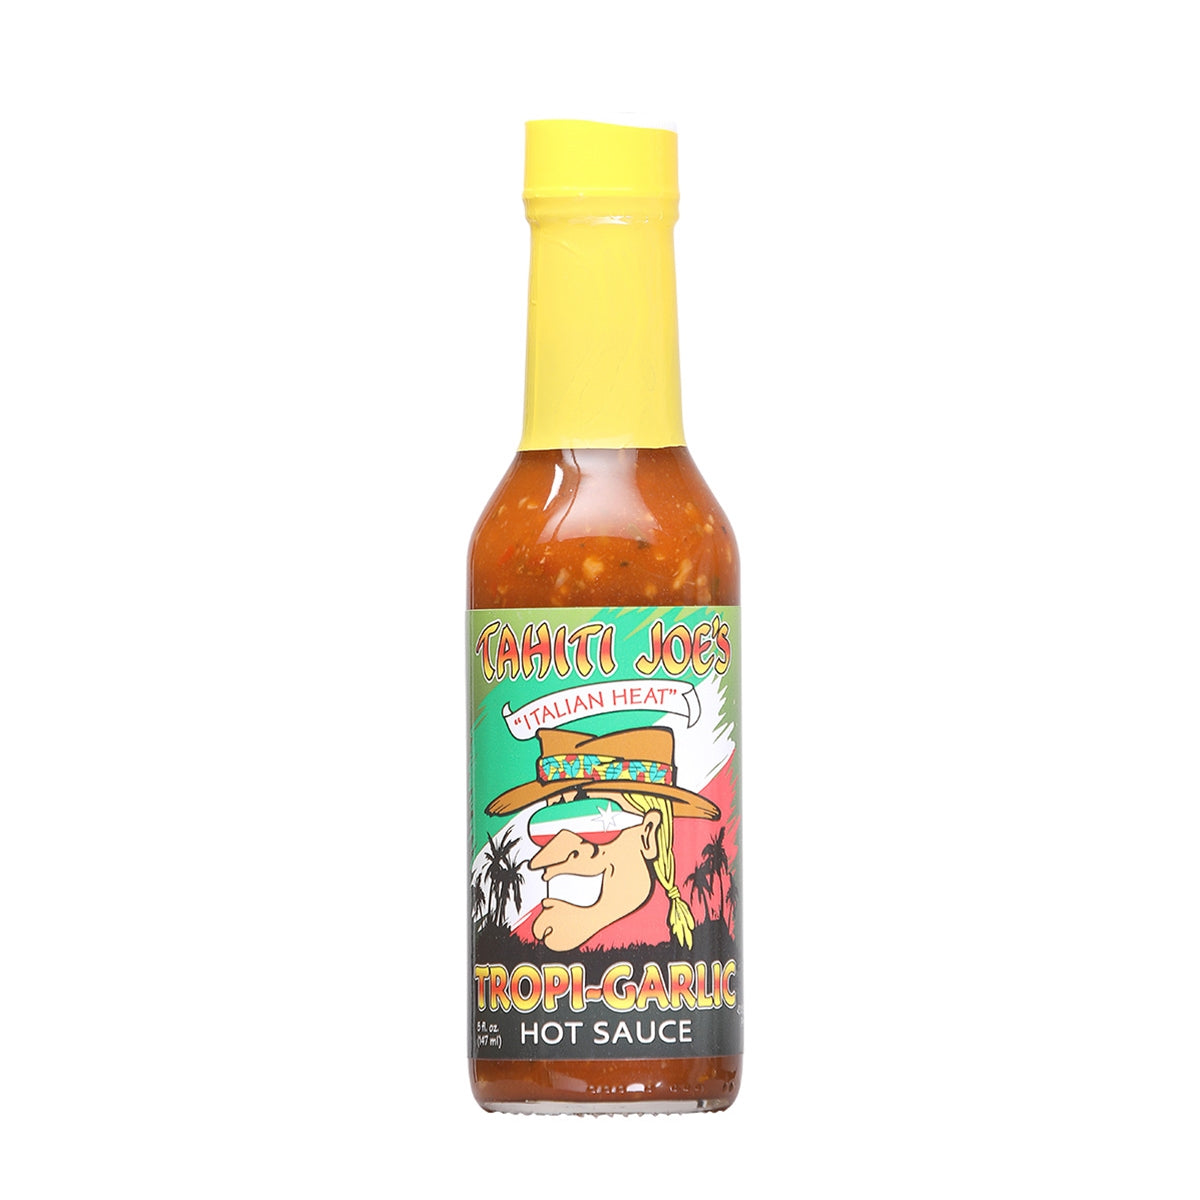 Hot Sauce Tahitis Joes Tropi-Garlic Italian Heat 5 oz Heat 6 *.98